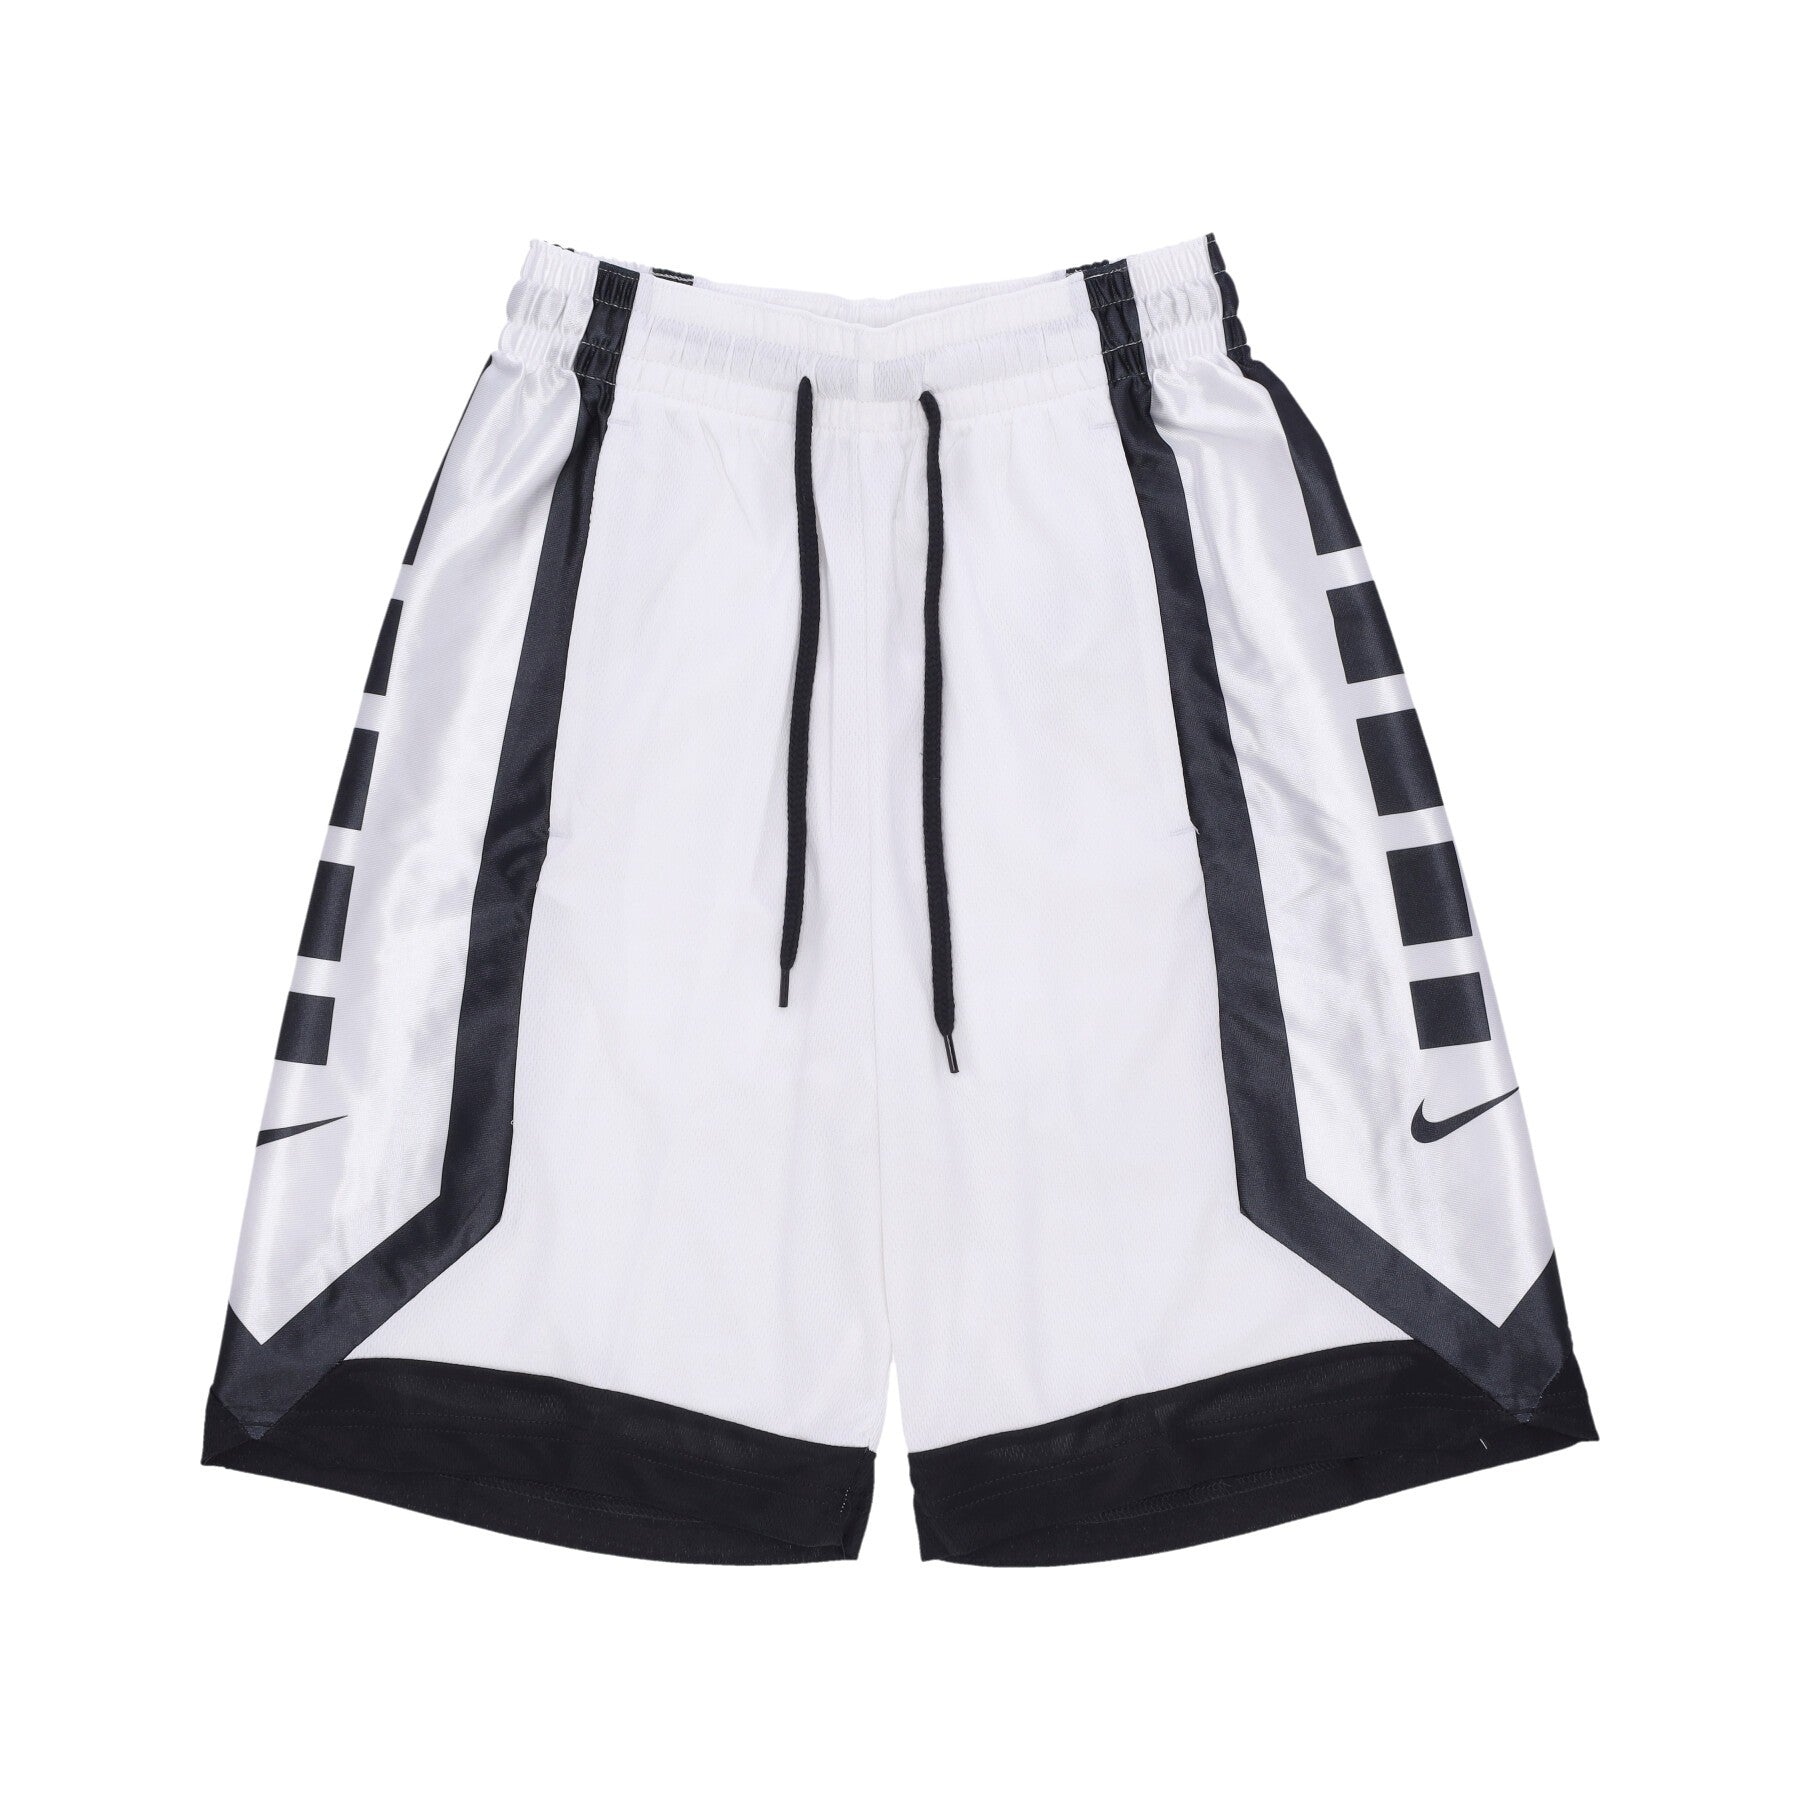 Pantaloncino Tipo Basket Uomo Dri-fit Elite Basketball Shorts White/black/black